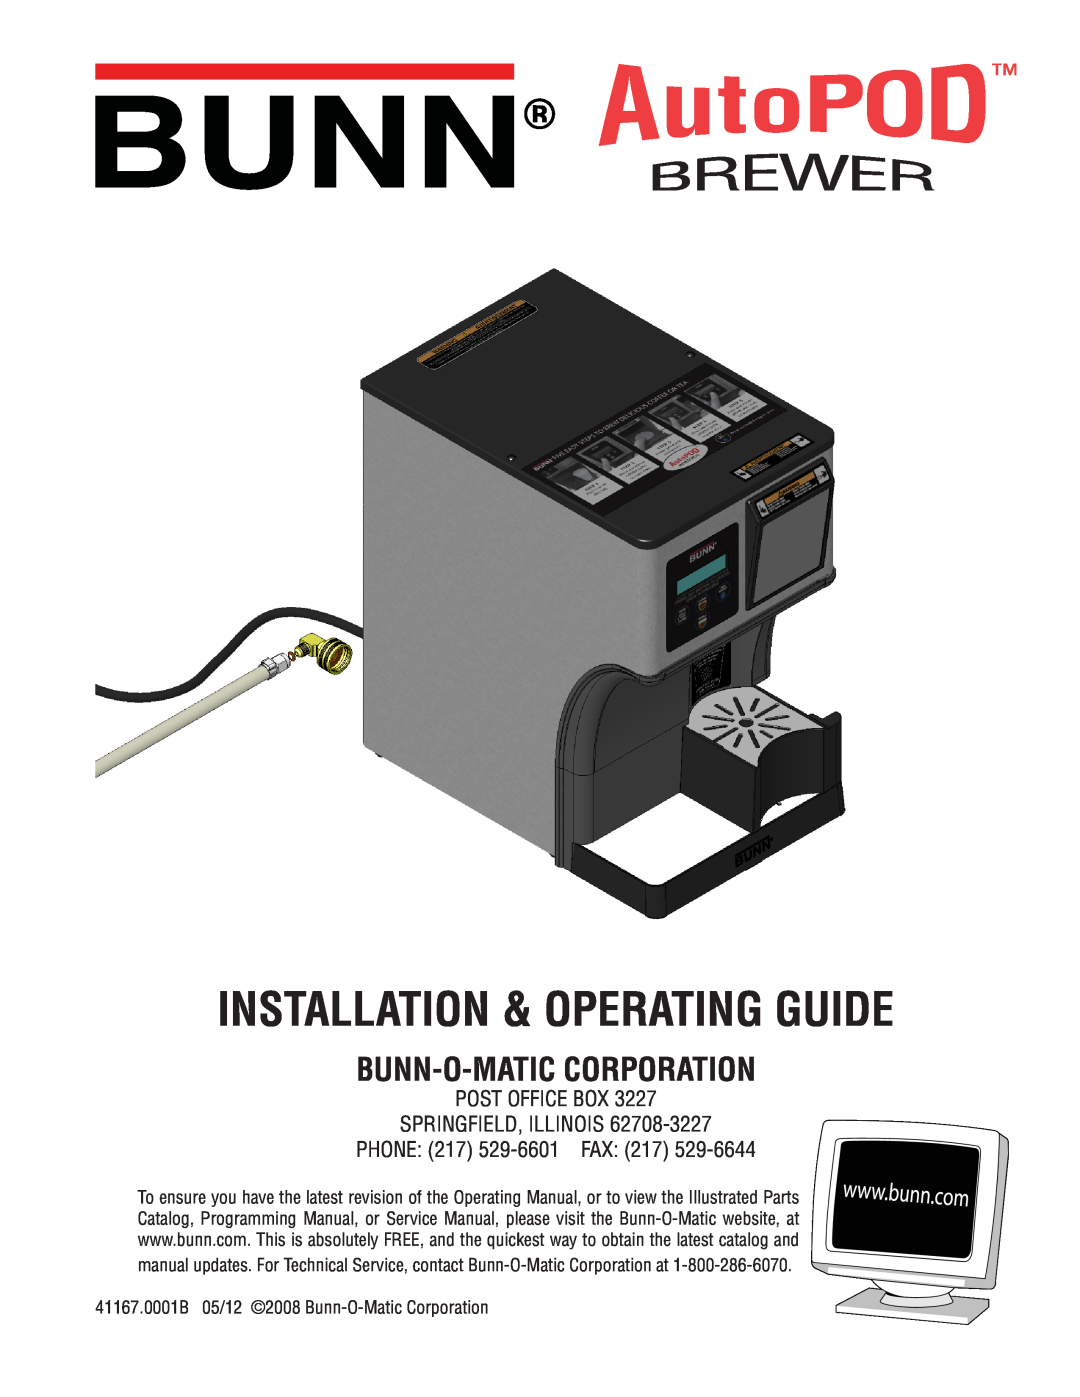 Bunn 41167.0001B service manual Bunn-O-Maticcorporation, Installation & Operating Guide 